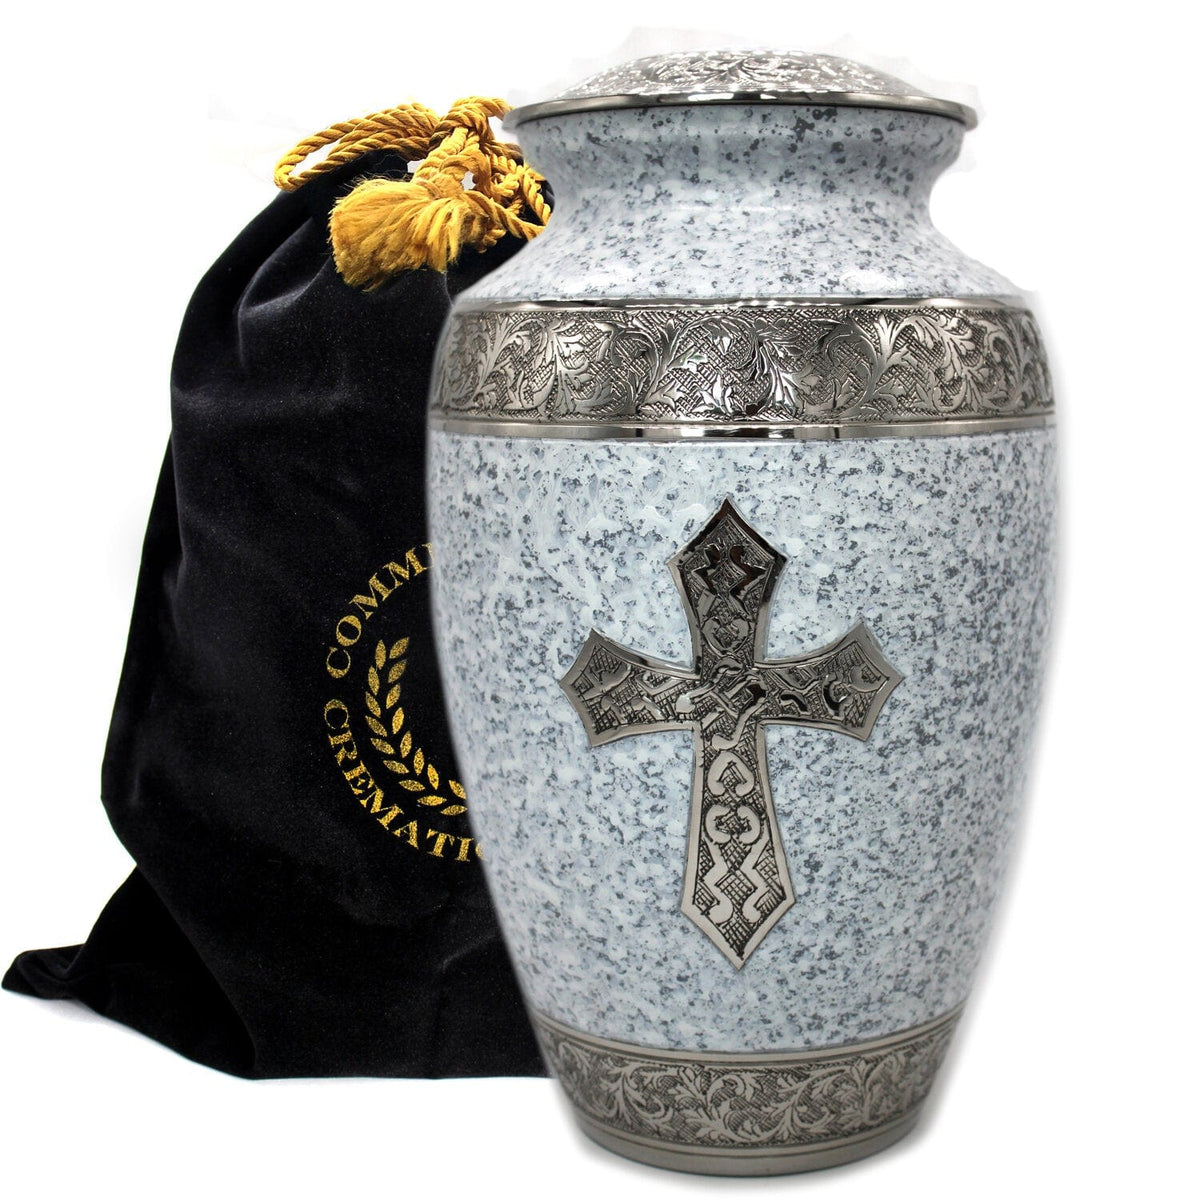 Commemorative Cremation Urns Home &amp; Garden Large Love of Christ Speckled White Cremation Urn